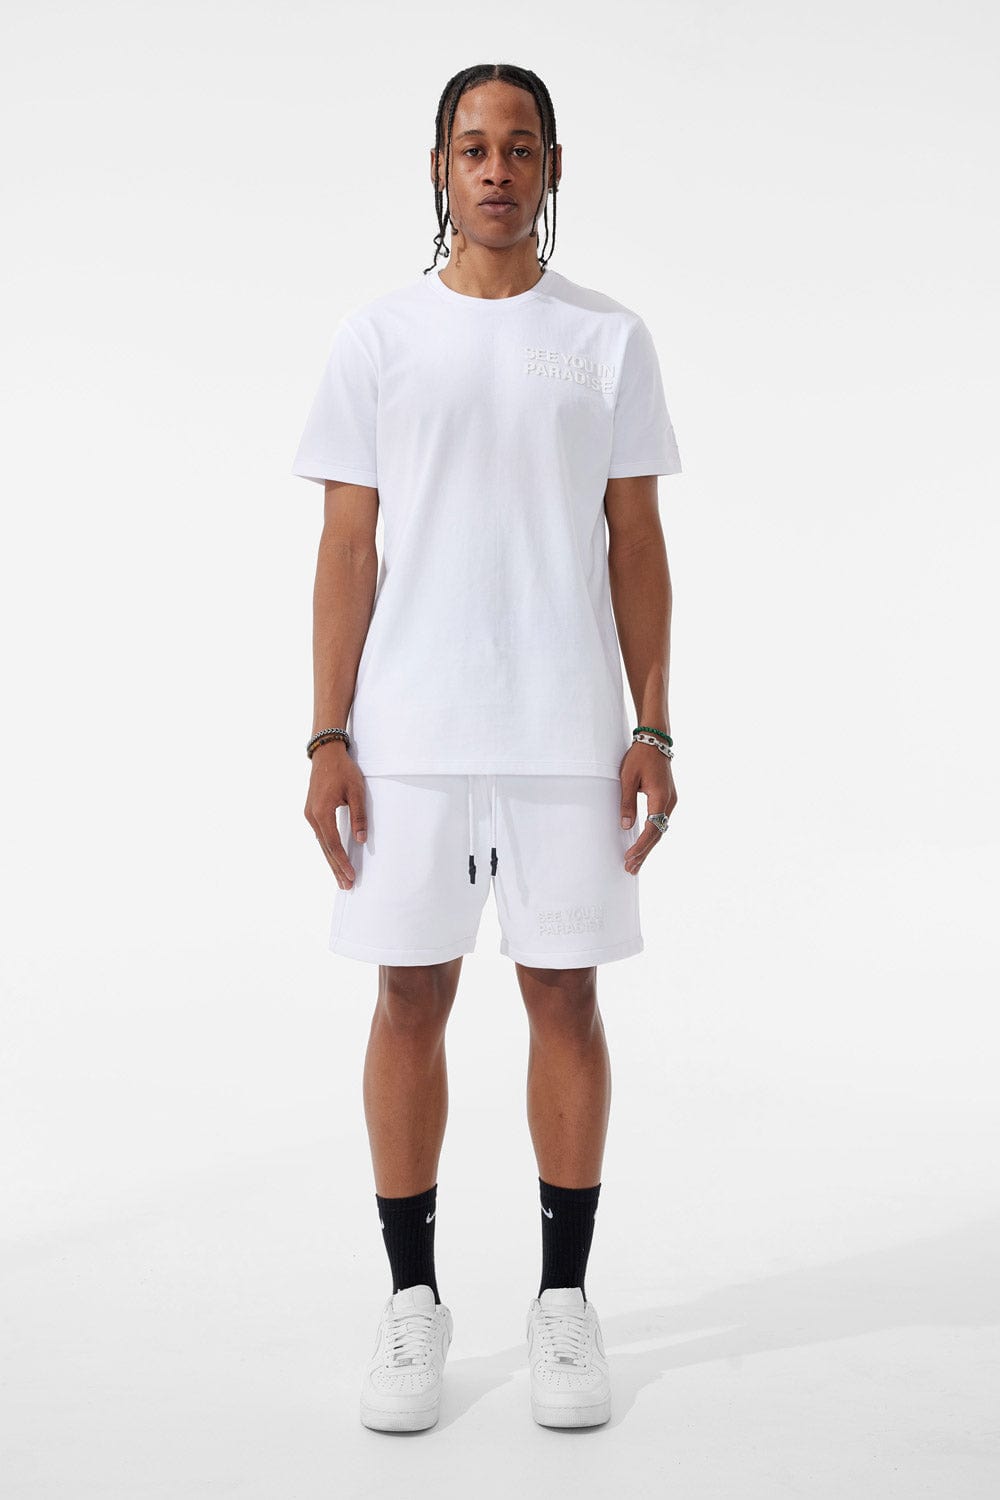 Jordan Craig Retro - Paradise Tonal Shorts (White)